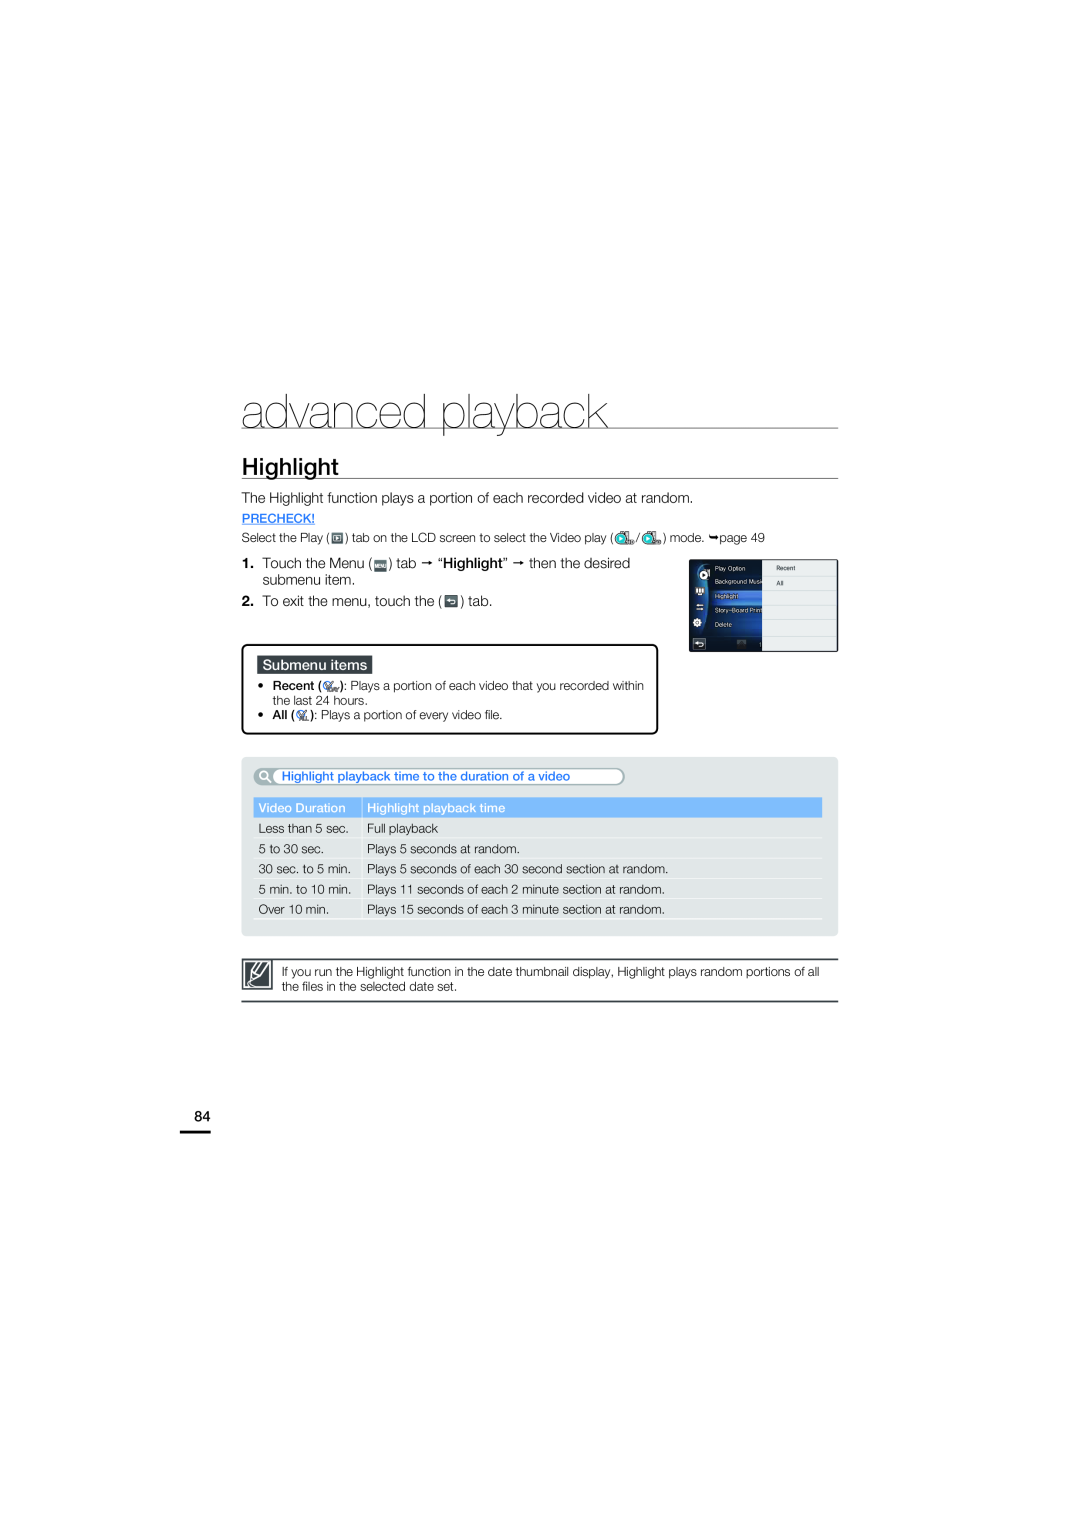 Samsung HMX-S15BN/XAA, HMX-S10BN/XAA manual Highlight, advanced playback, Submenu items, Precheck 